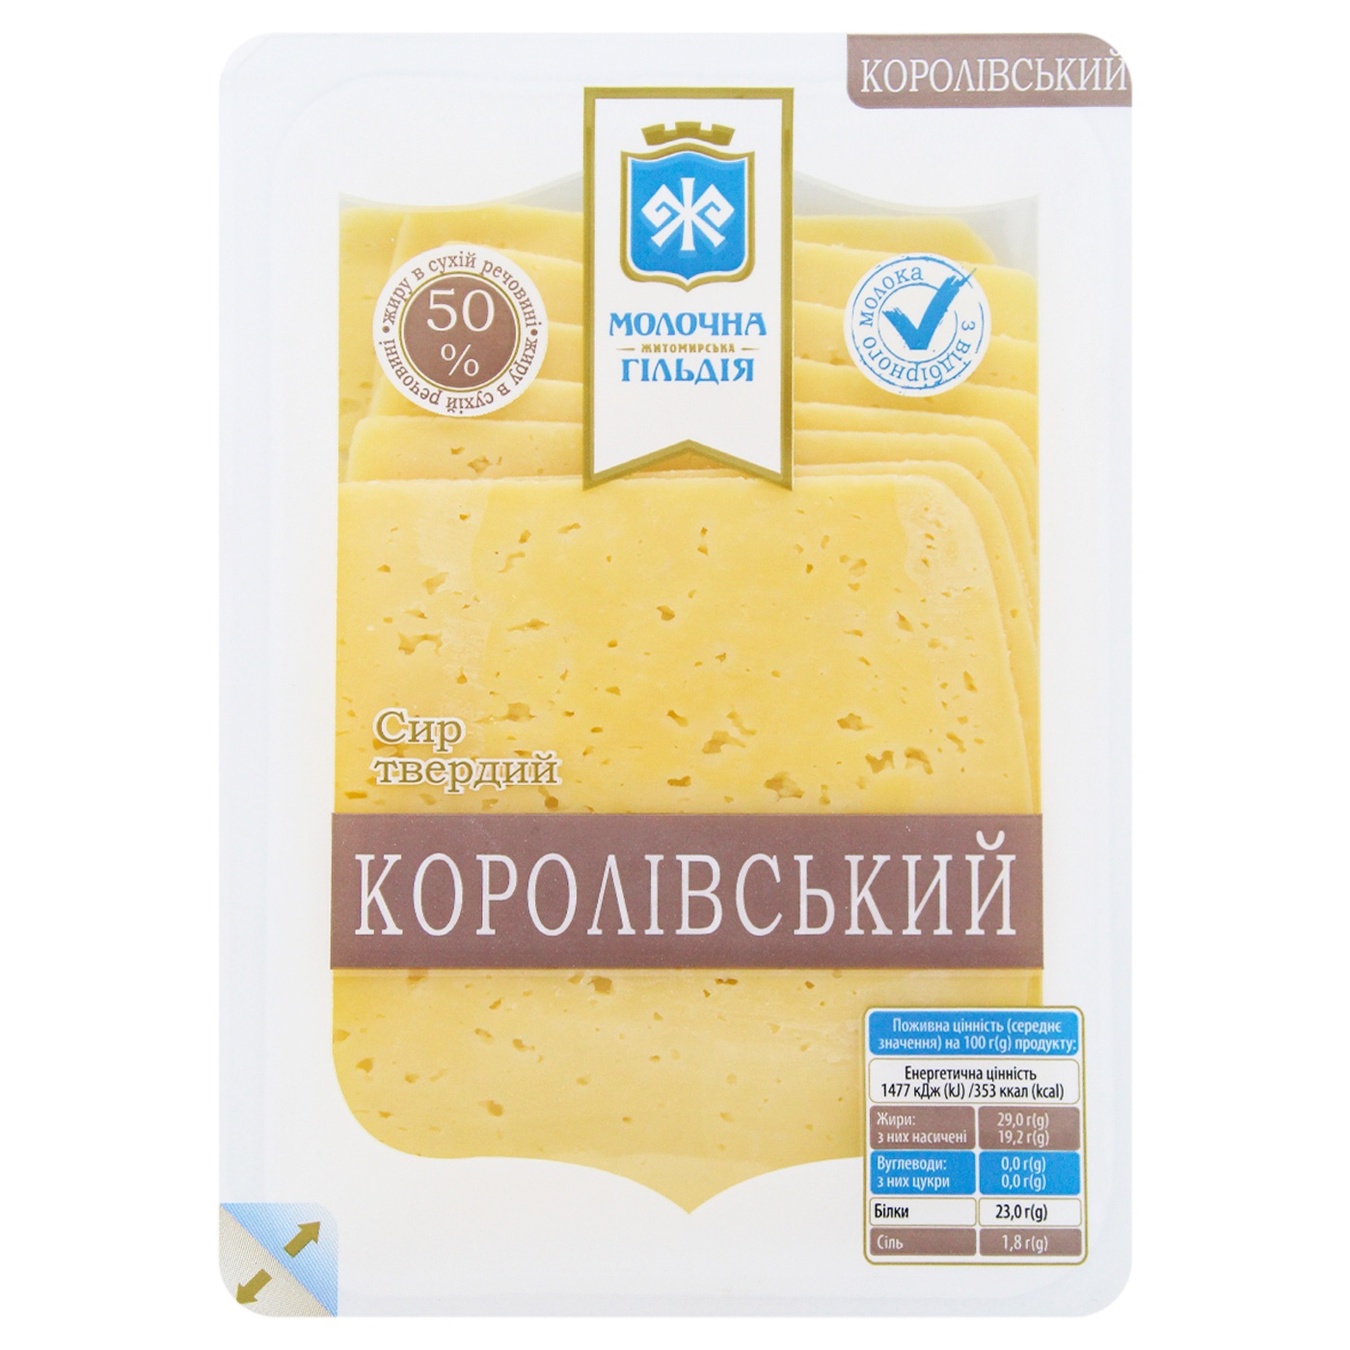 Milk guild semi-hard Korolevskiy cheese 50% 150g